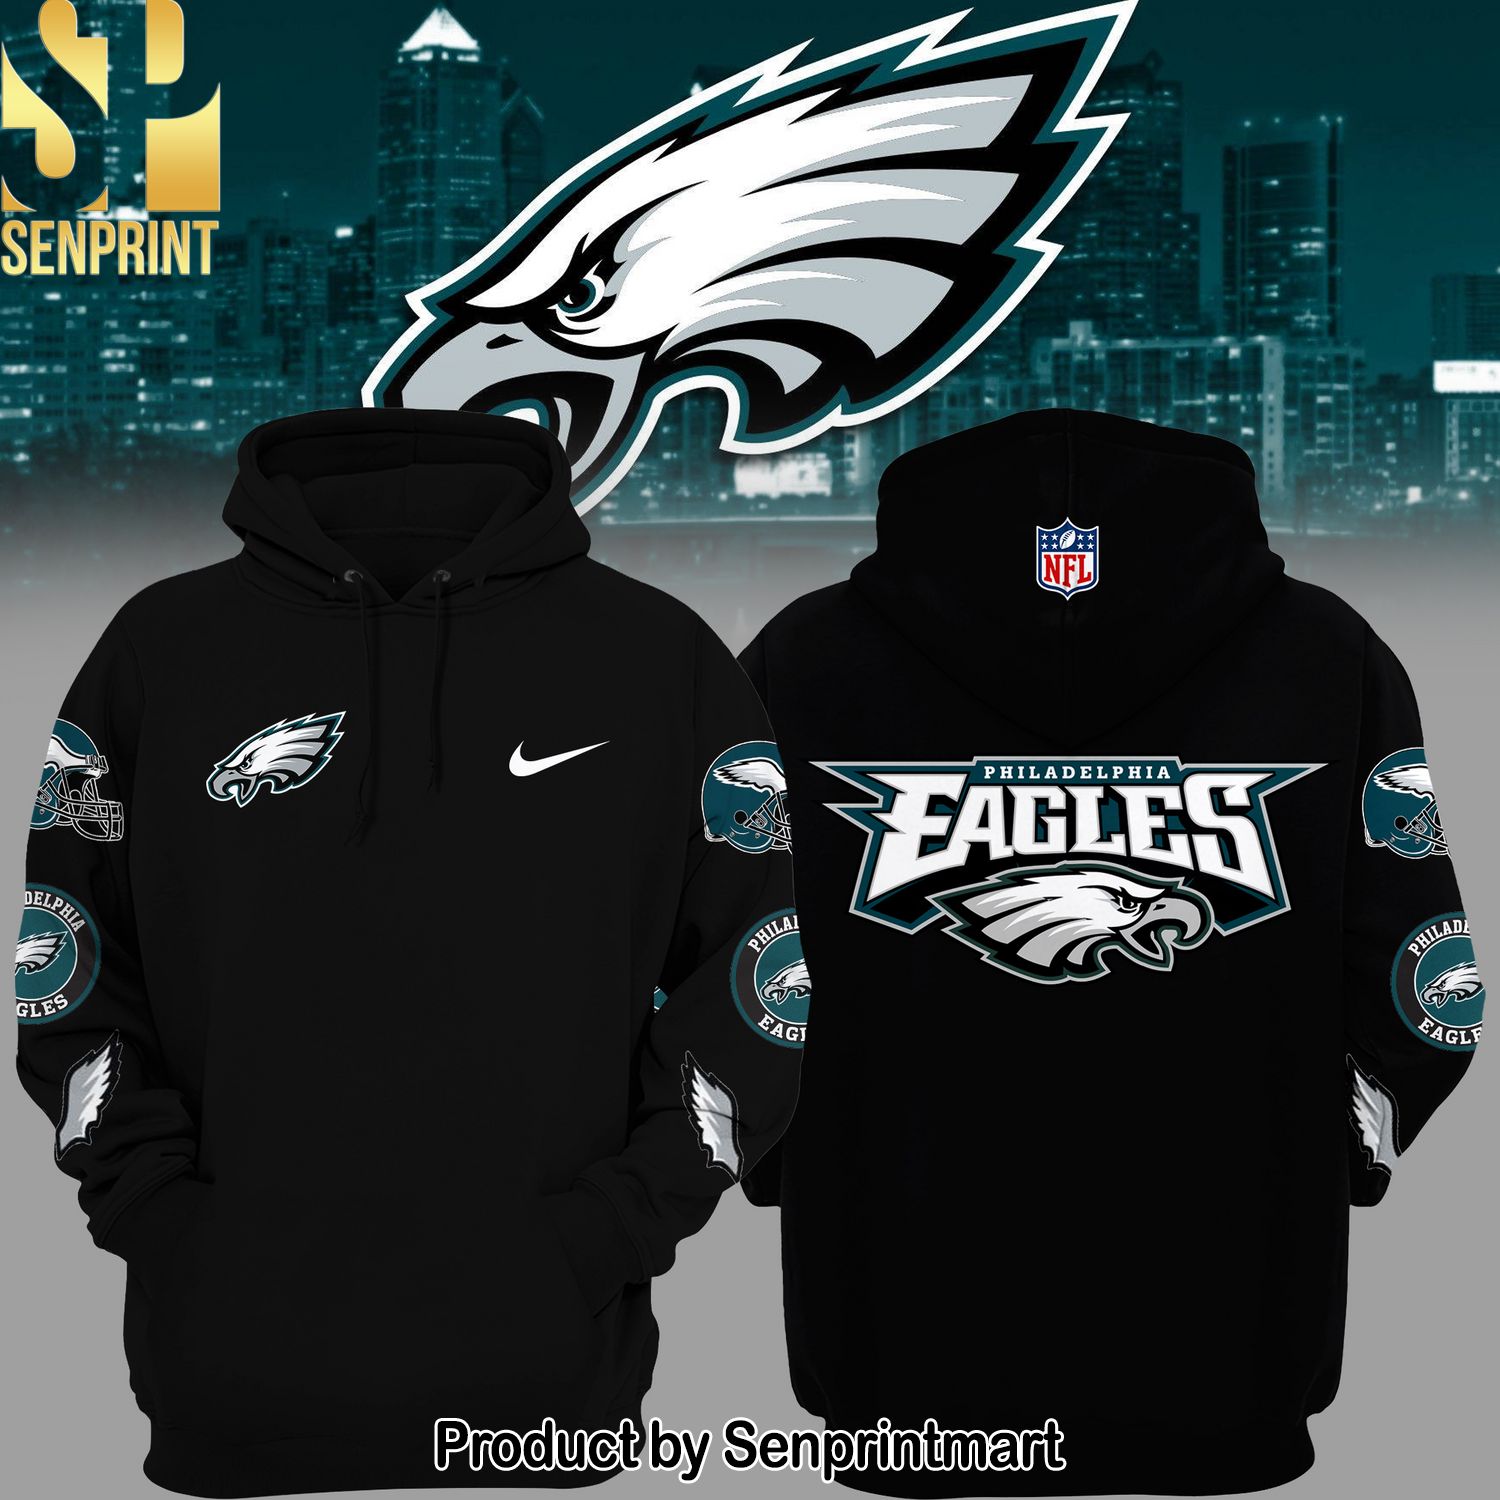 Philadelphia Eagles Football team FlyEaglesFly edition 3D All Over Printed Shirt